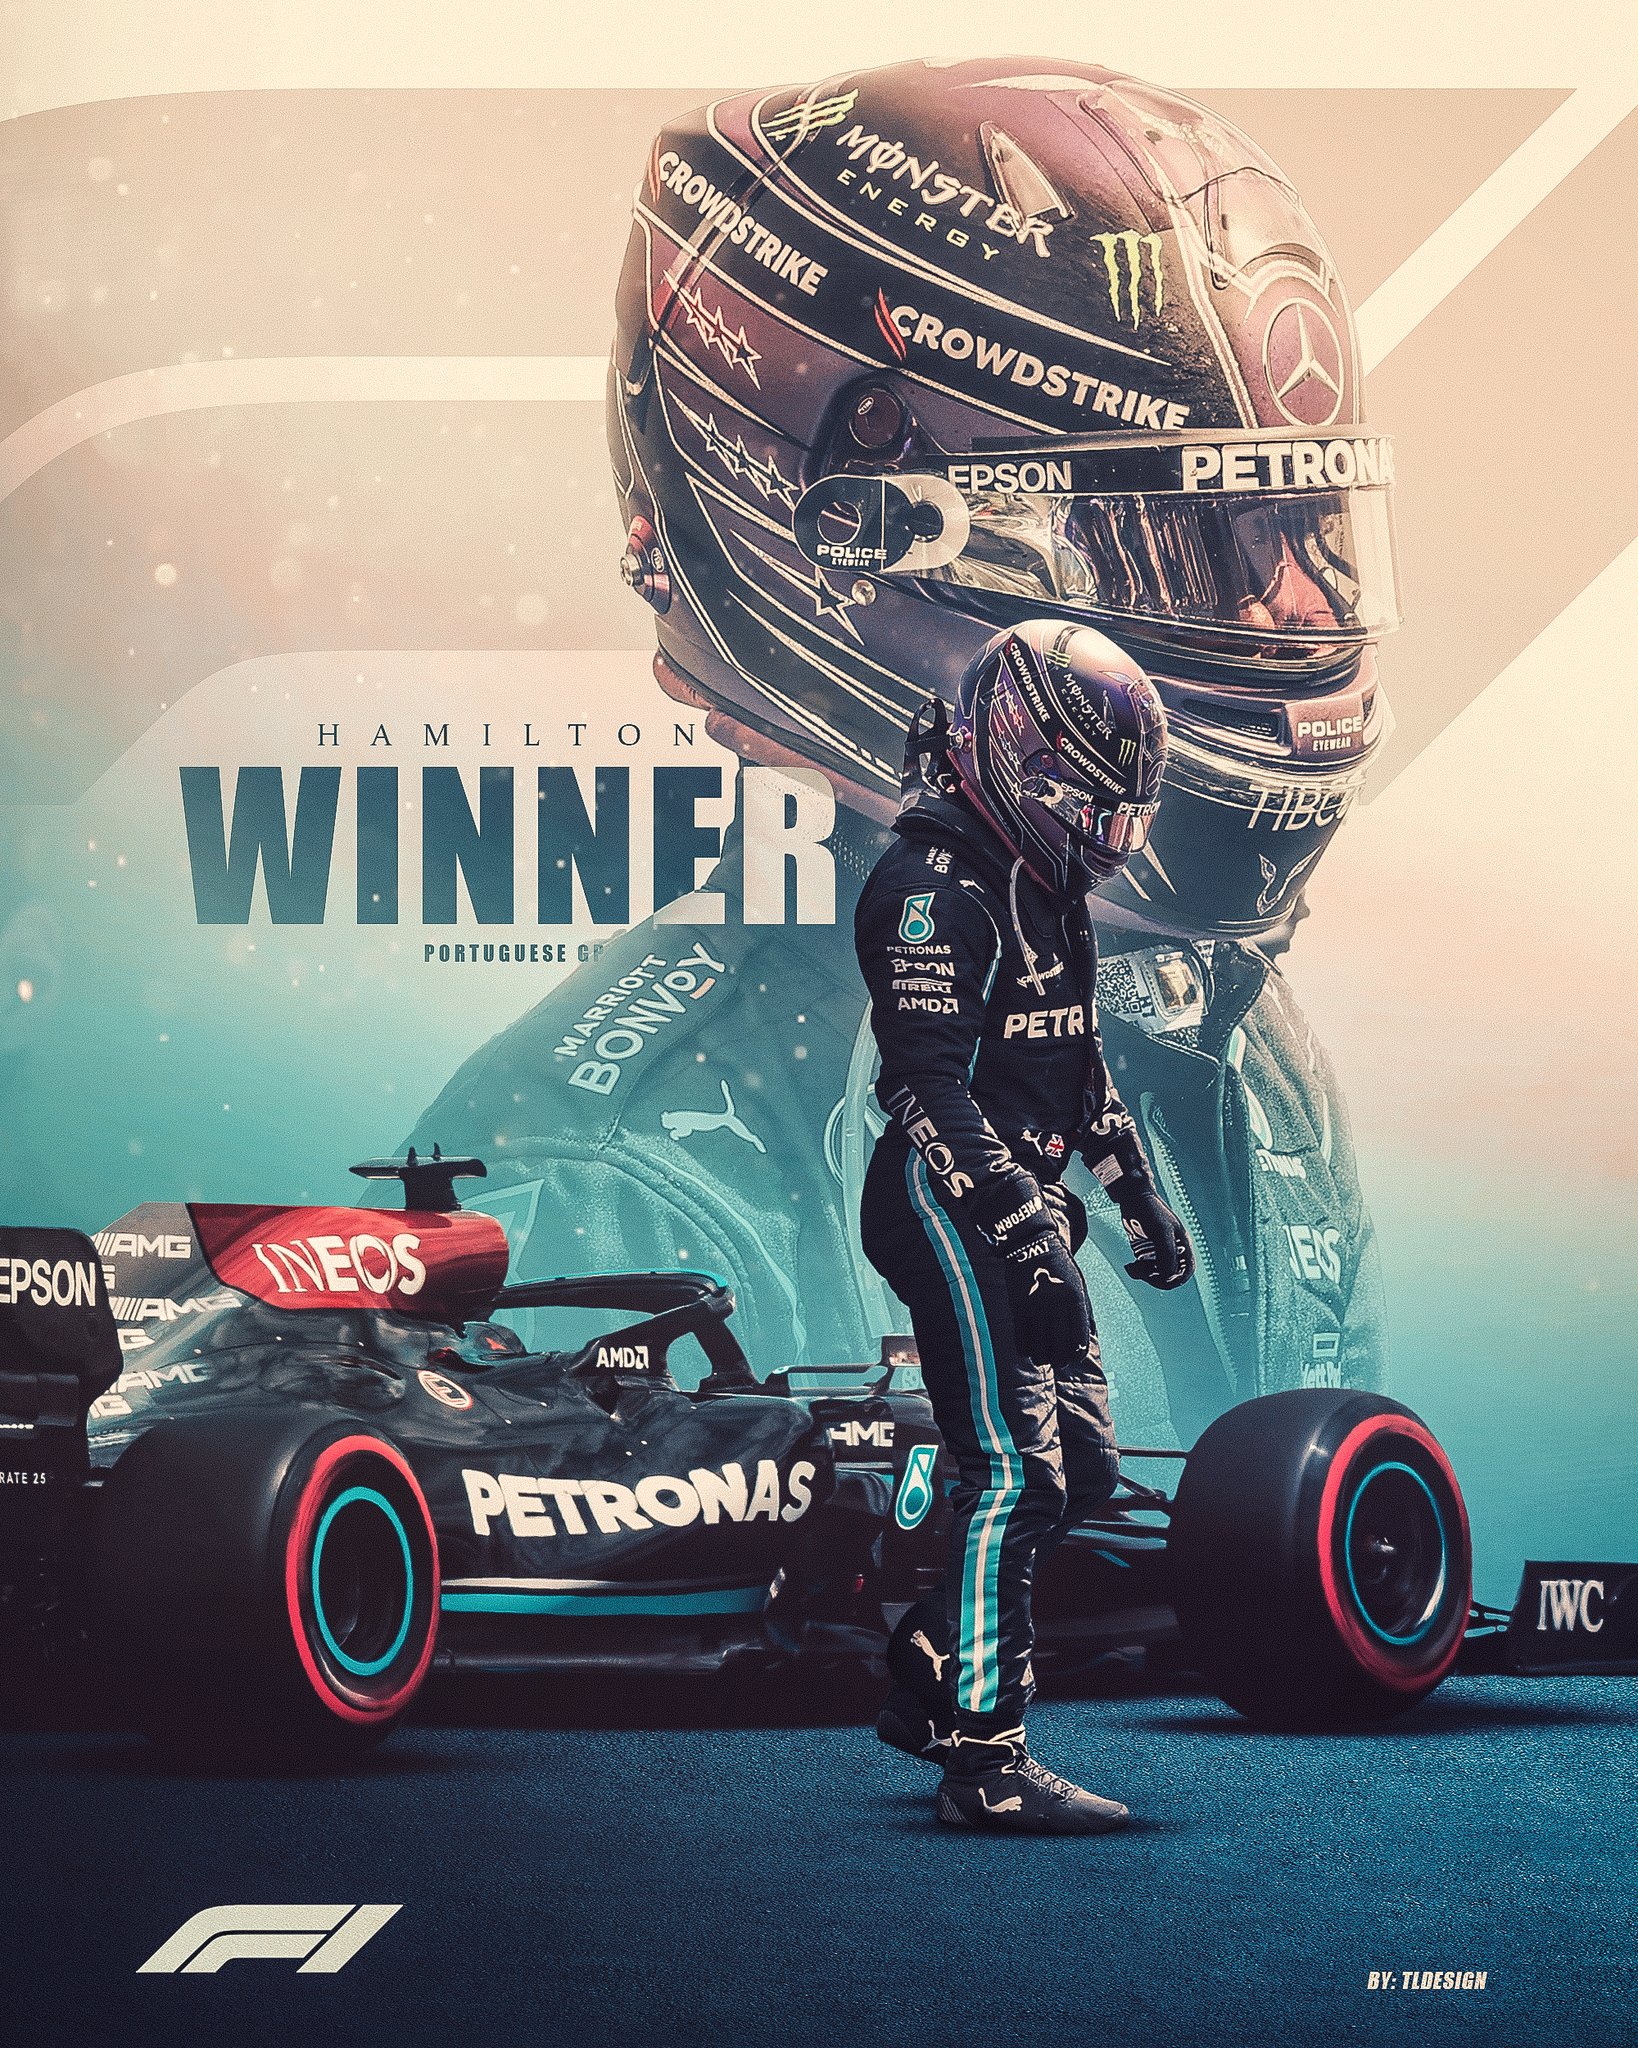 Tl Design on X: Lewis Hamilton #SpanishGP winner poster Win number 98  👏🔥🔥 @MercedesAMGF1 @LewisHamilton #LH44 #MercedesAMGF1 #F1   / X